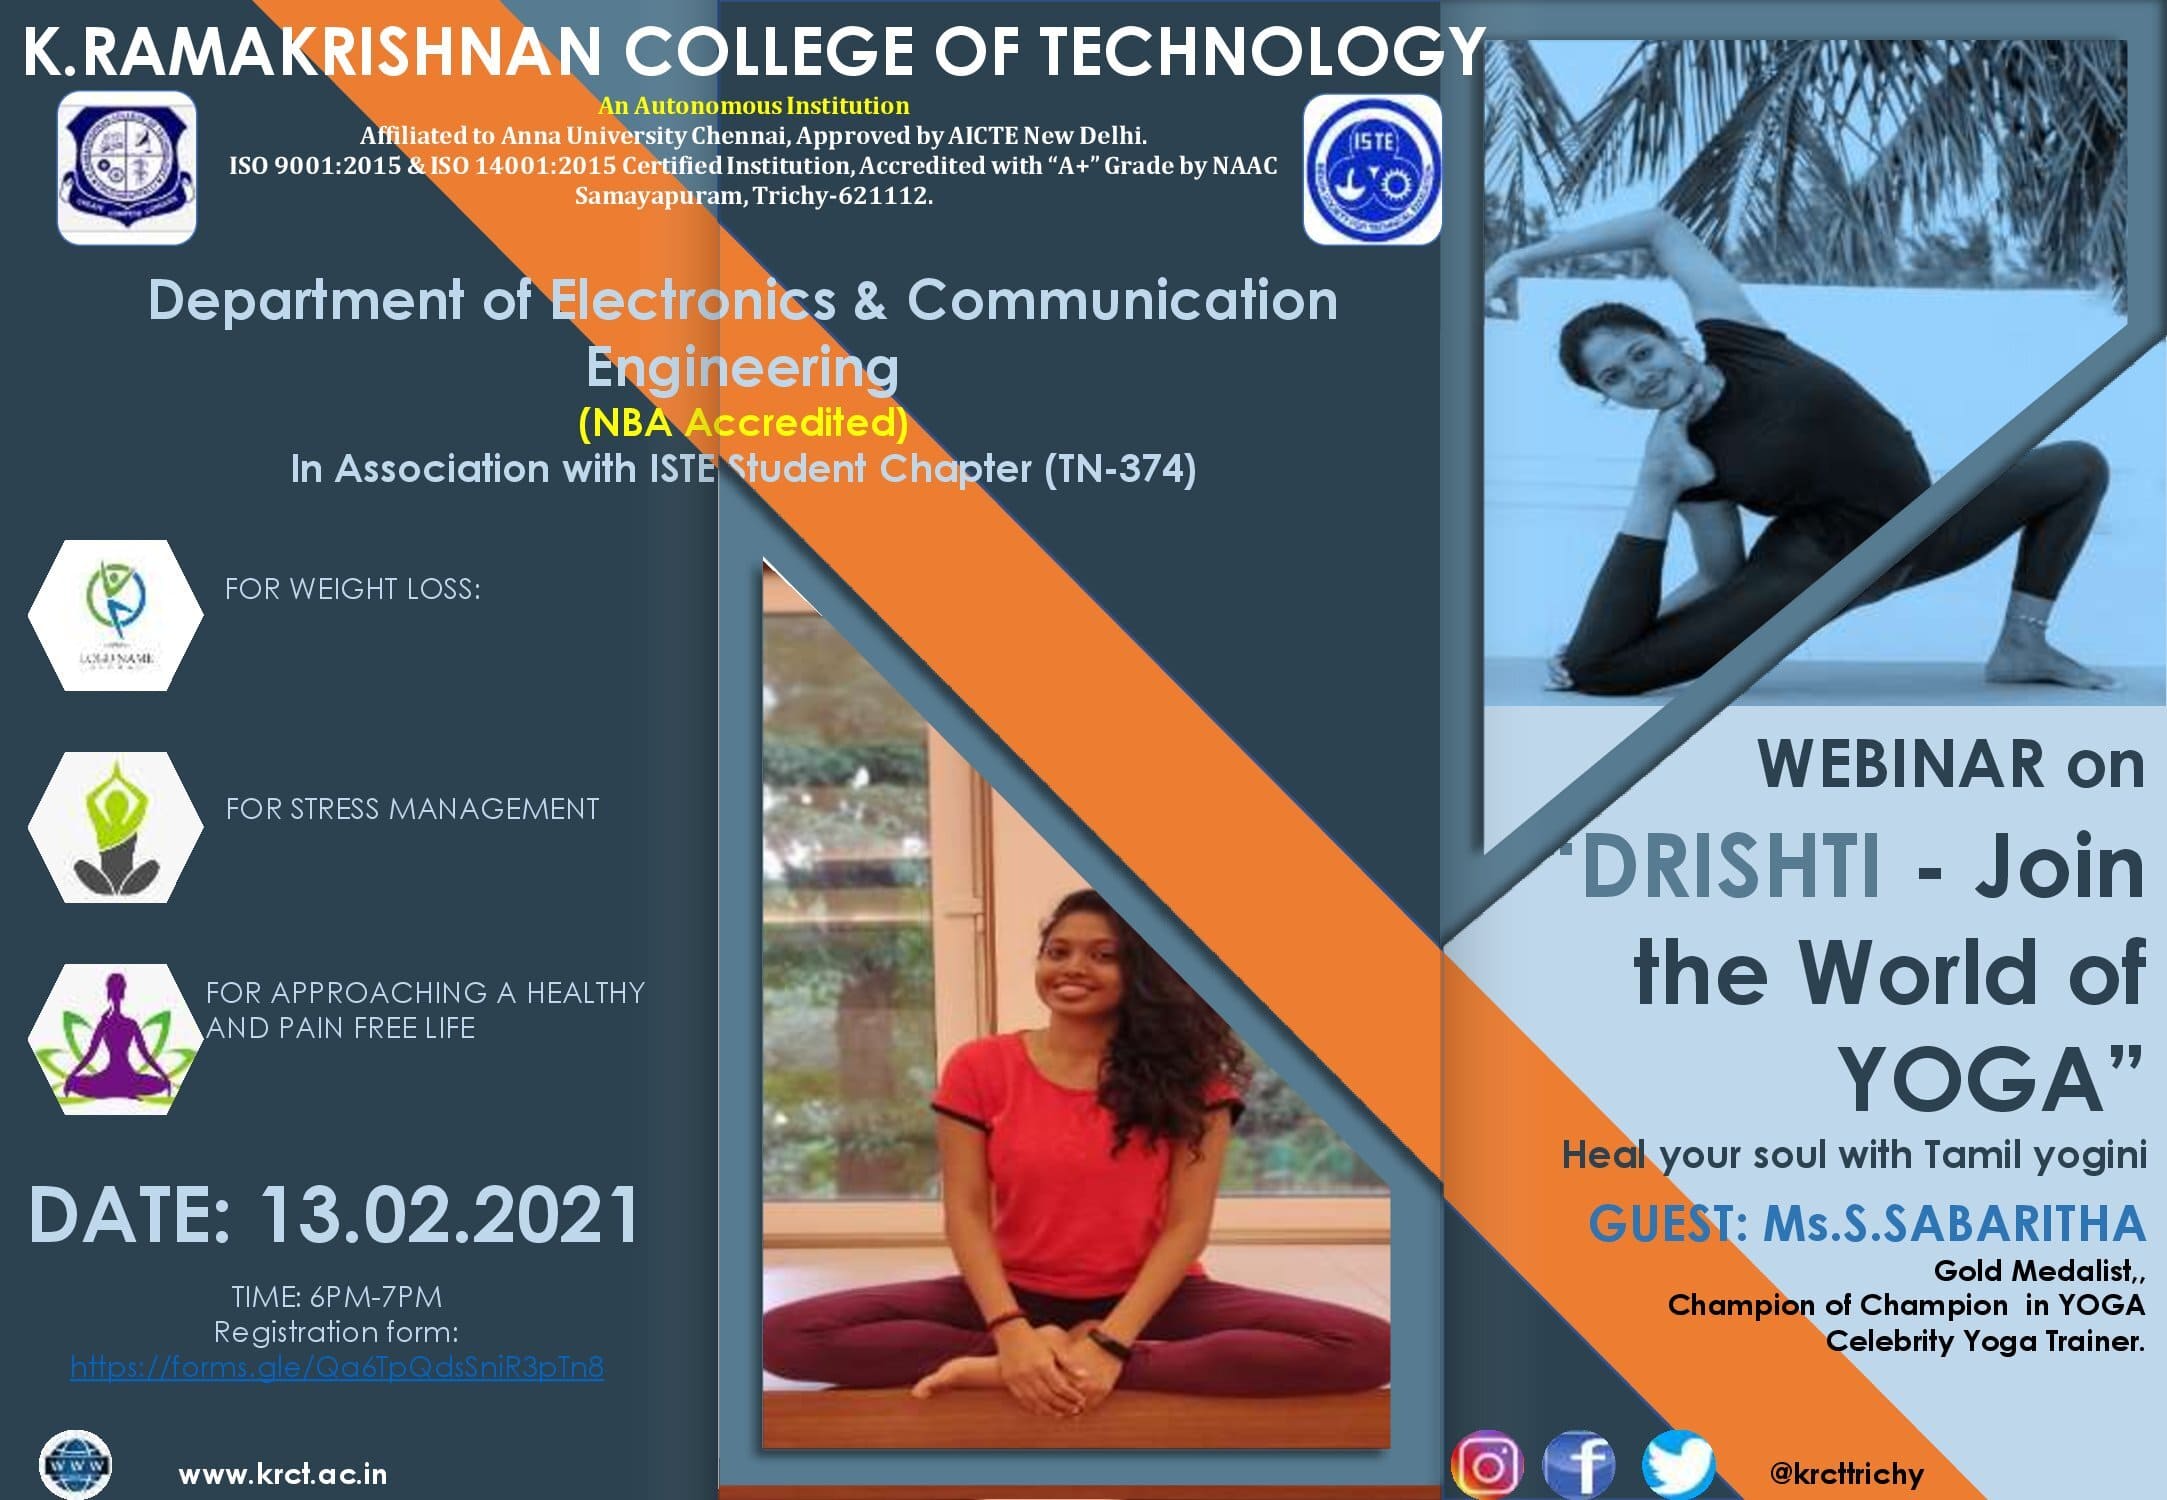 Webinar on Drishti - Join the World of Yoga 2021